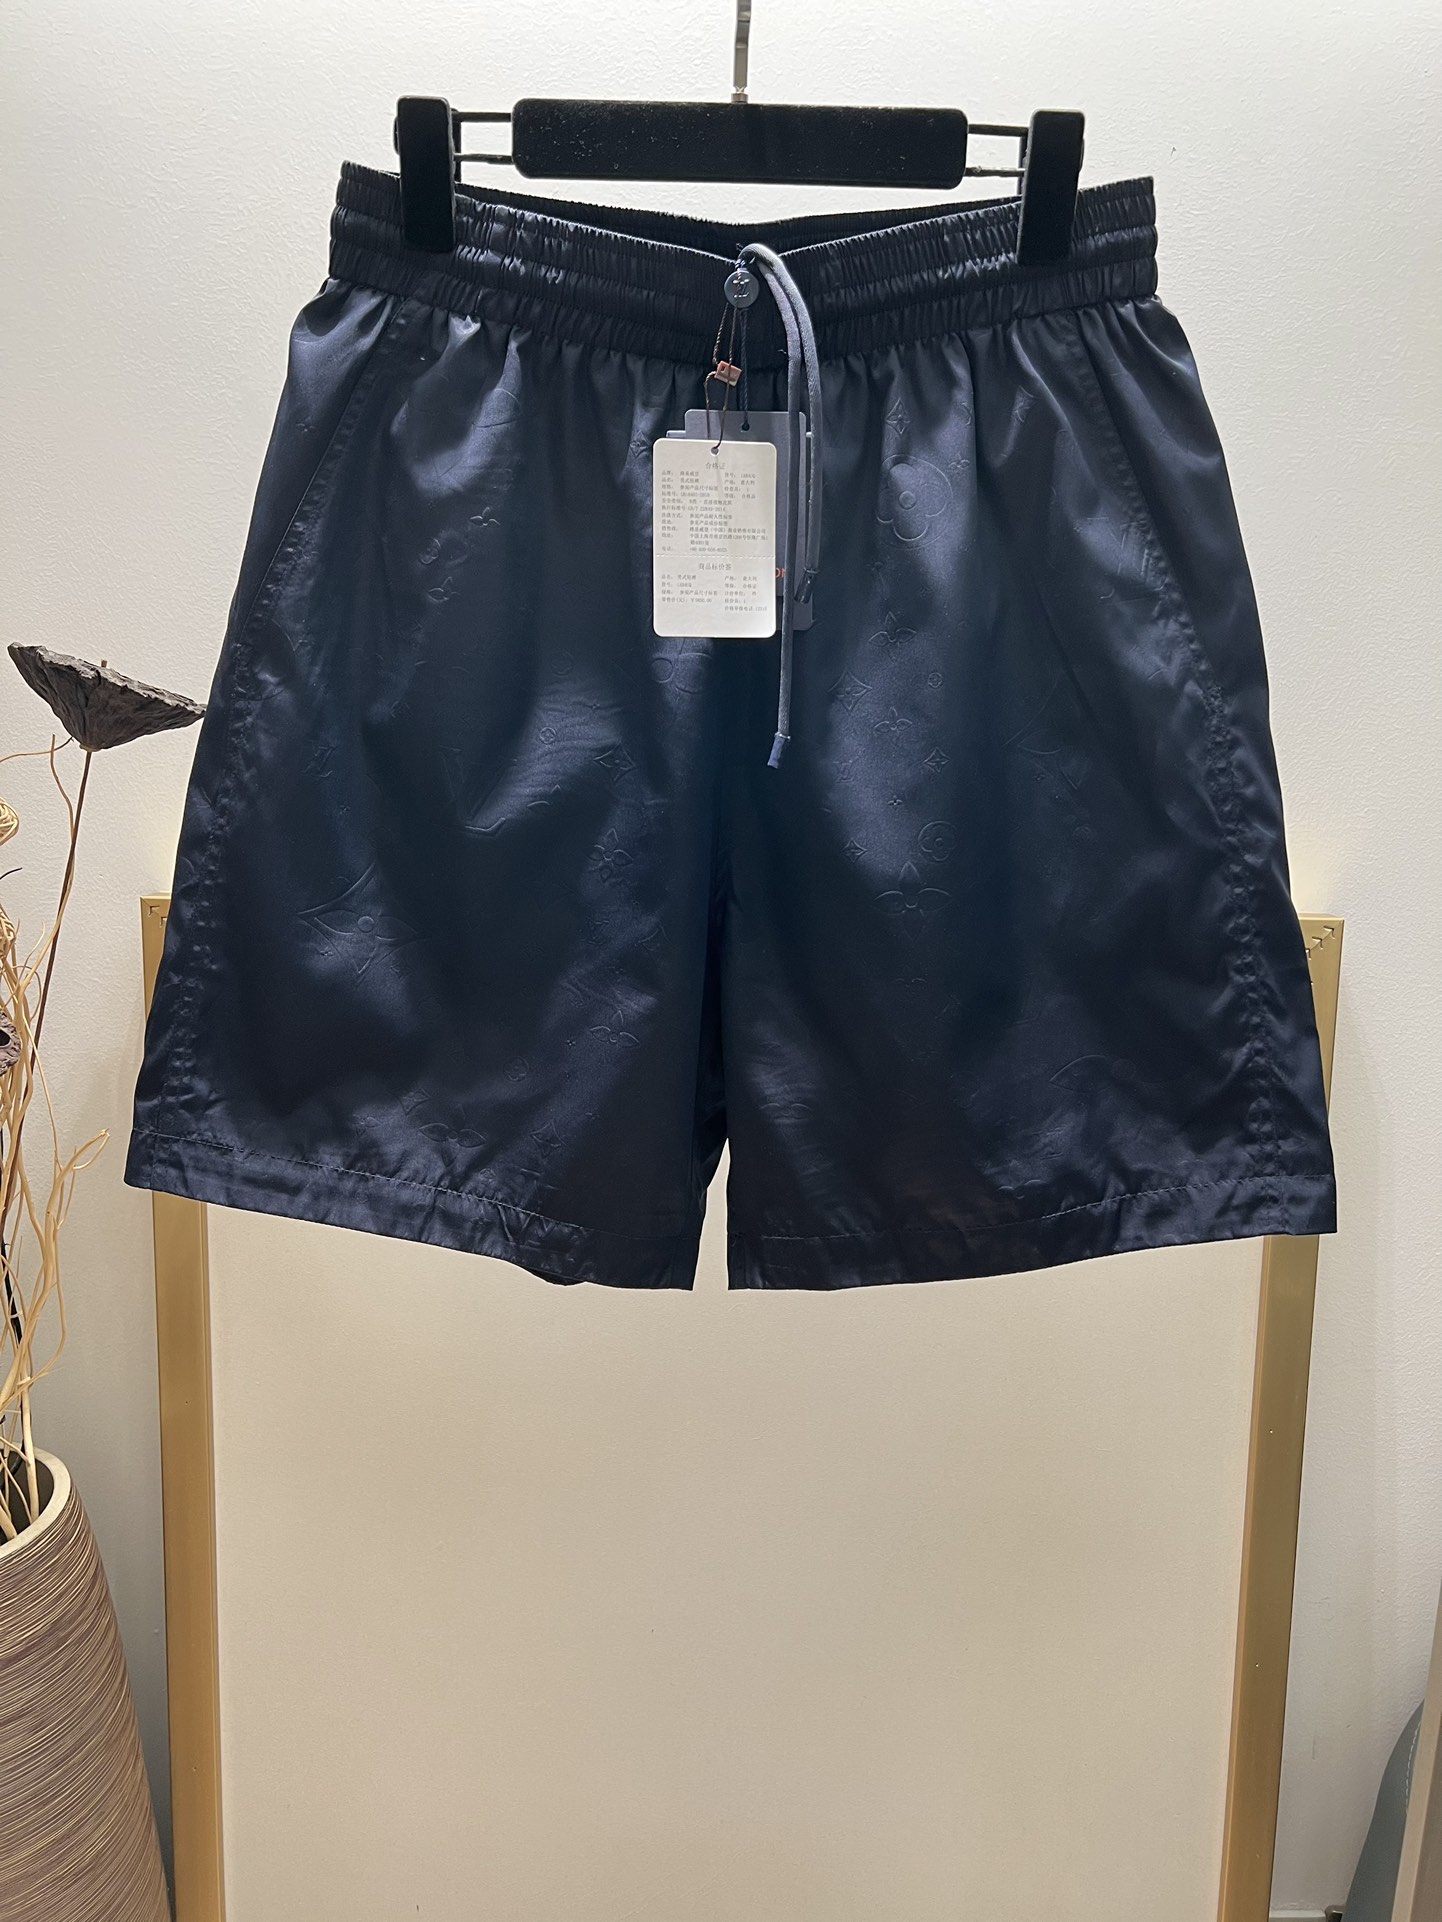 Louis Vuitton Clothing Shorts Cheap Replica
 Black Blue Green White Unisex Summer Collection